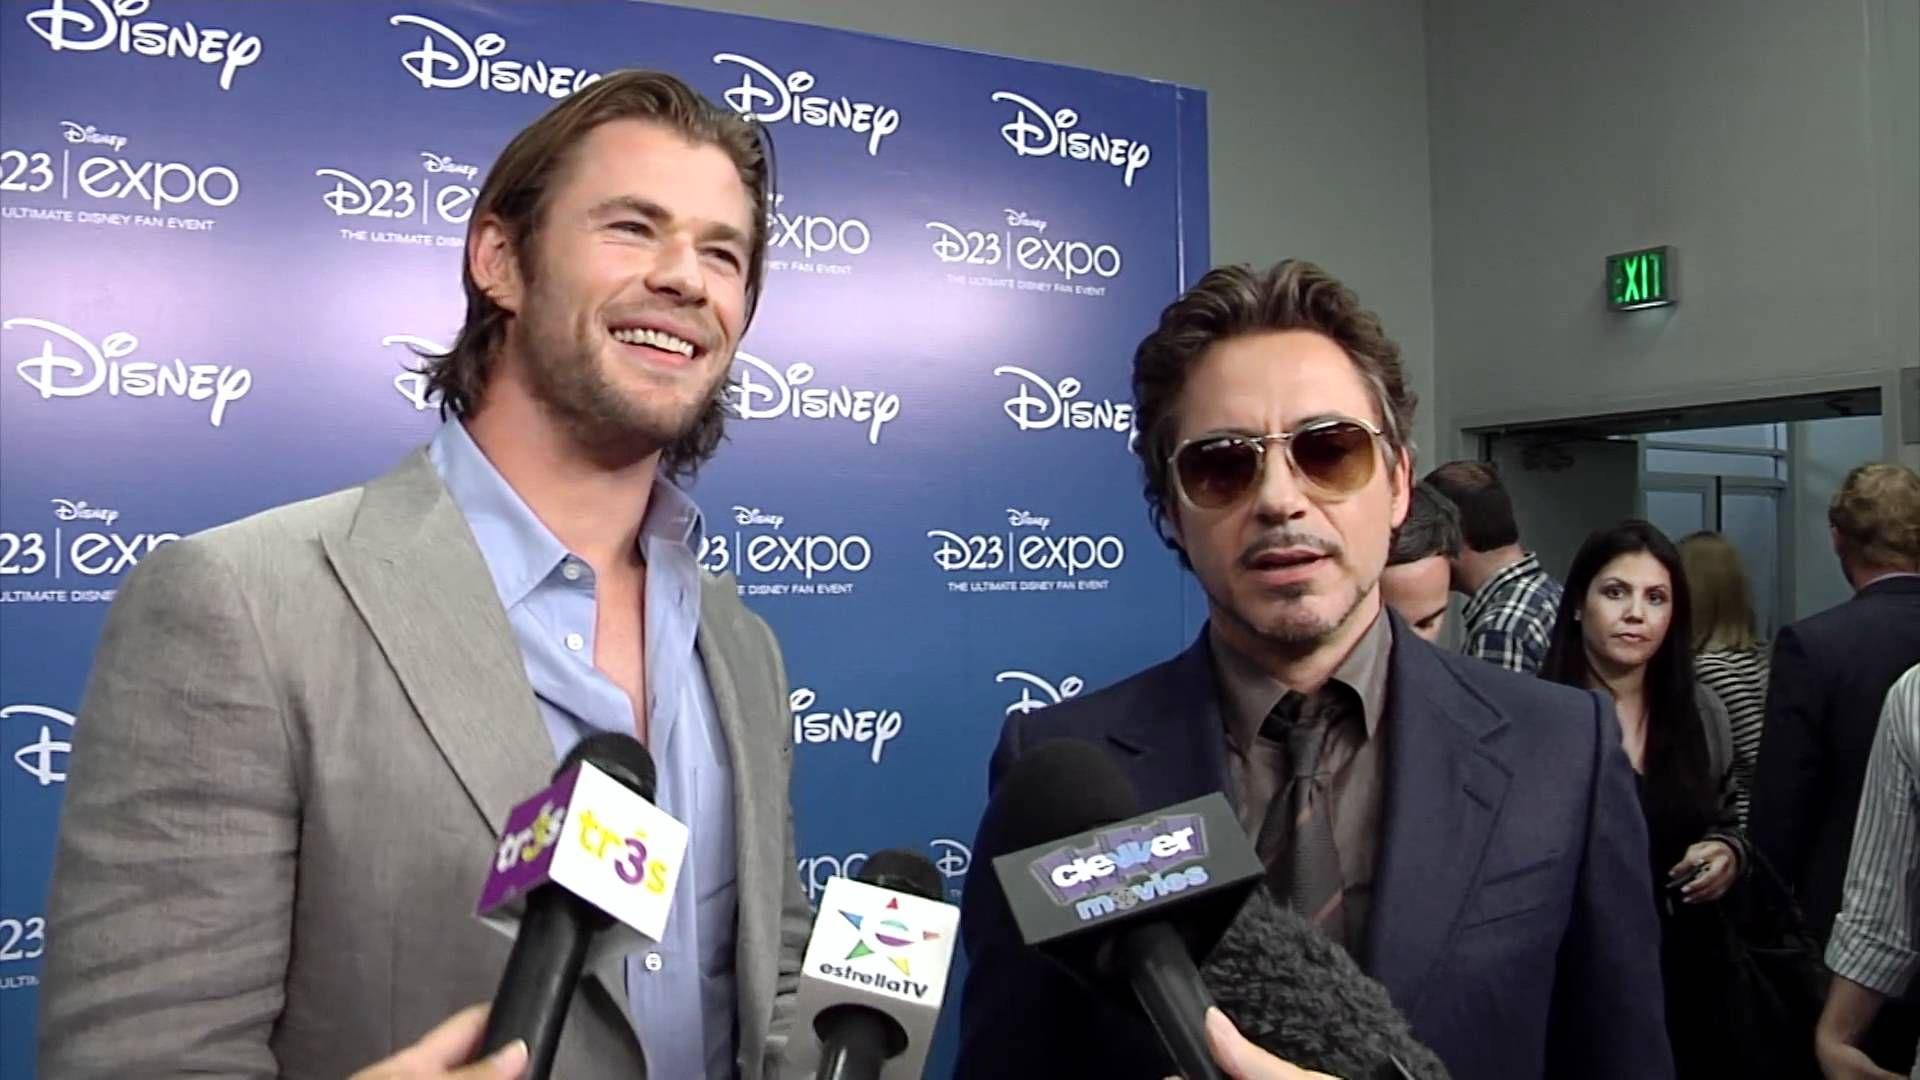 Robert Downey Jr. & Chris Hemsworth Talk 'The Avengers' At